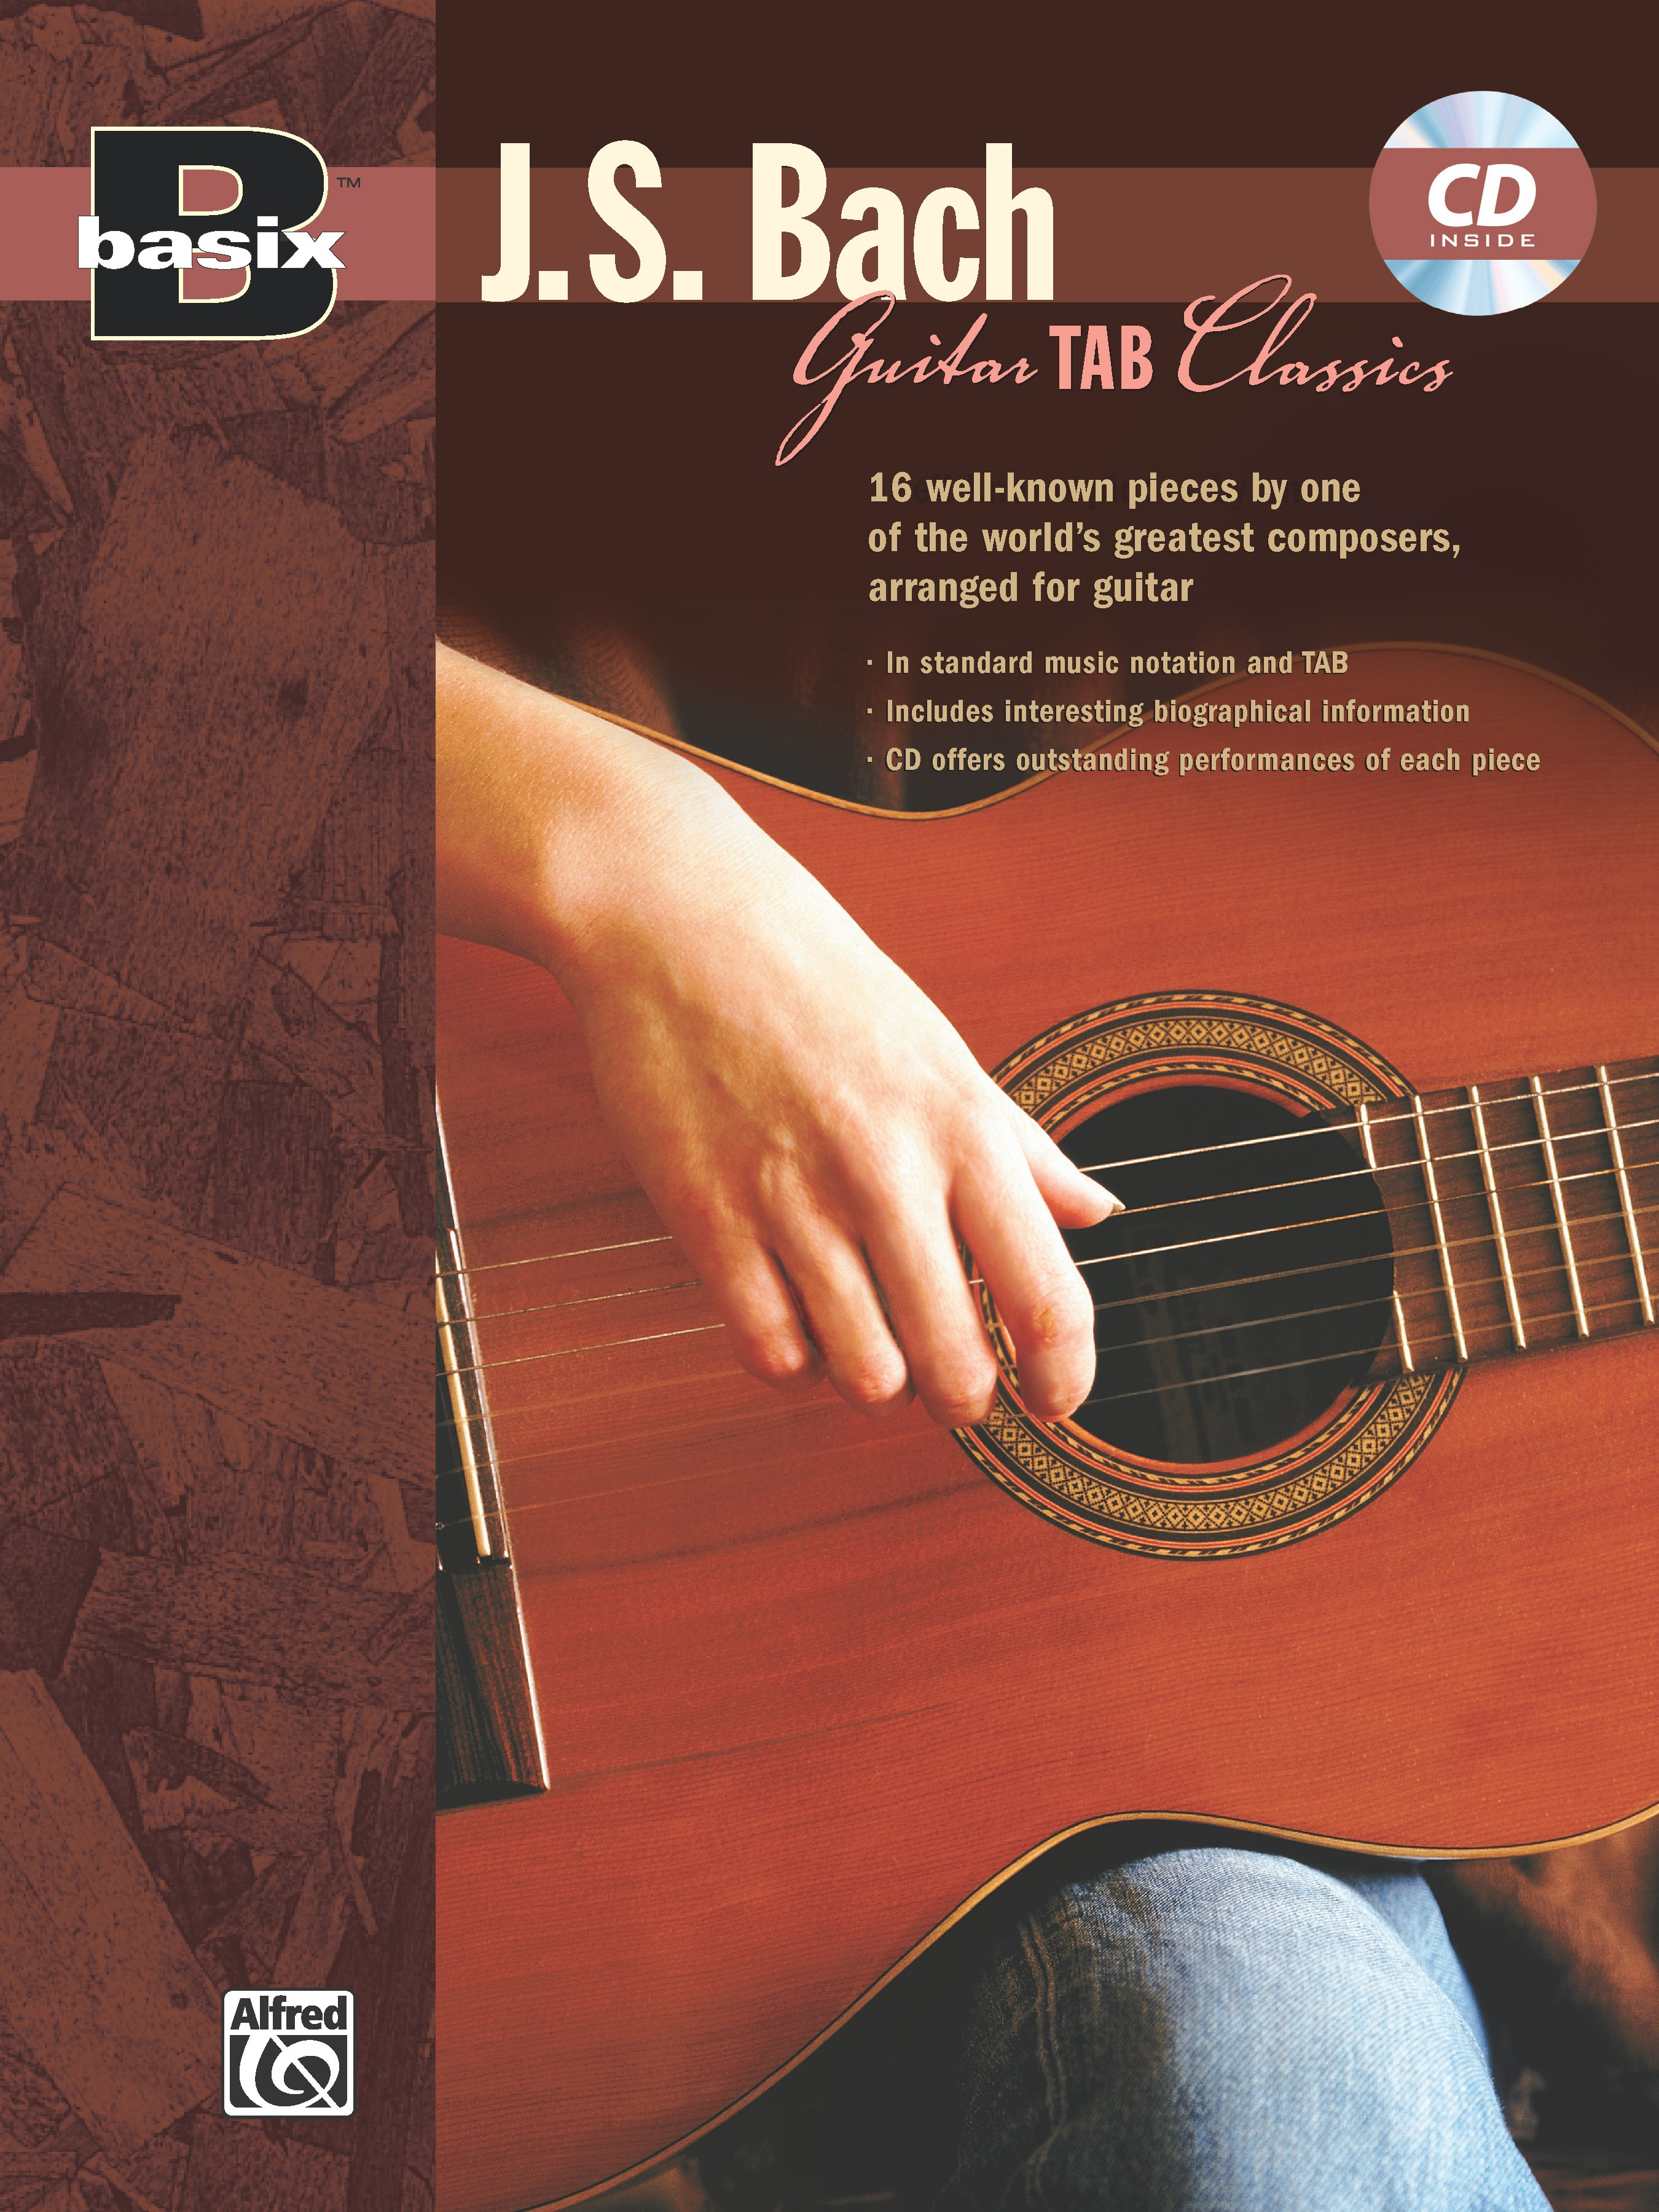 Basix® Guitar TAB Classics: J. S. Bach